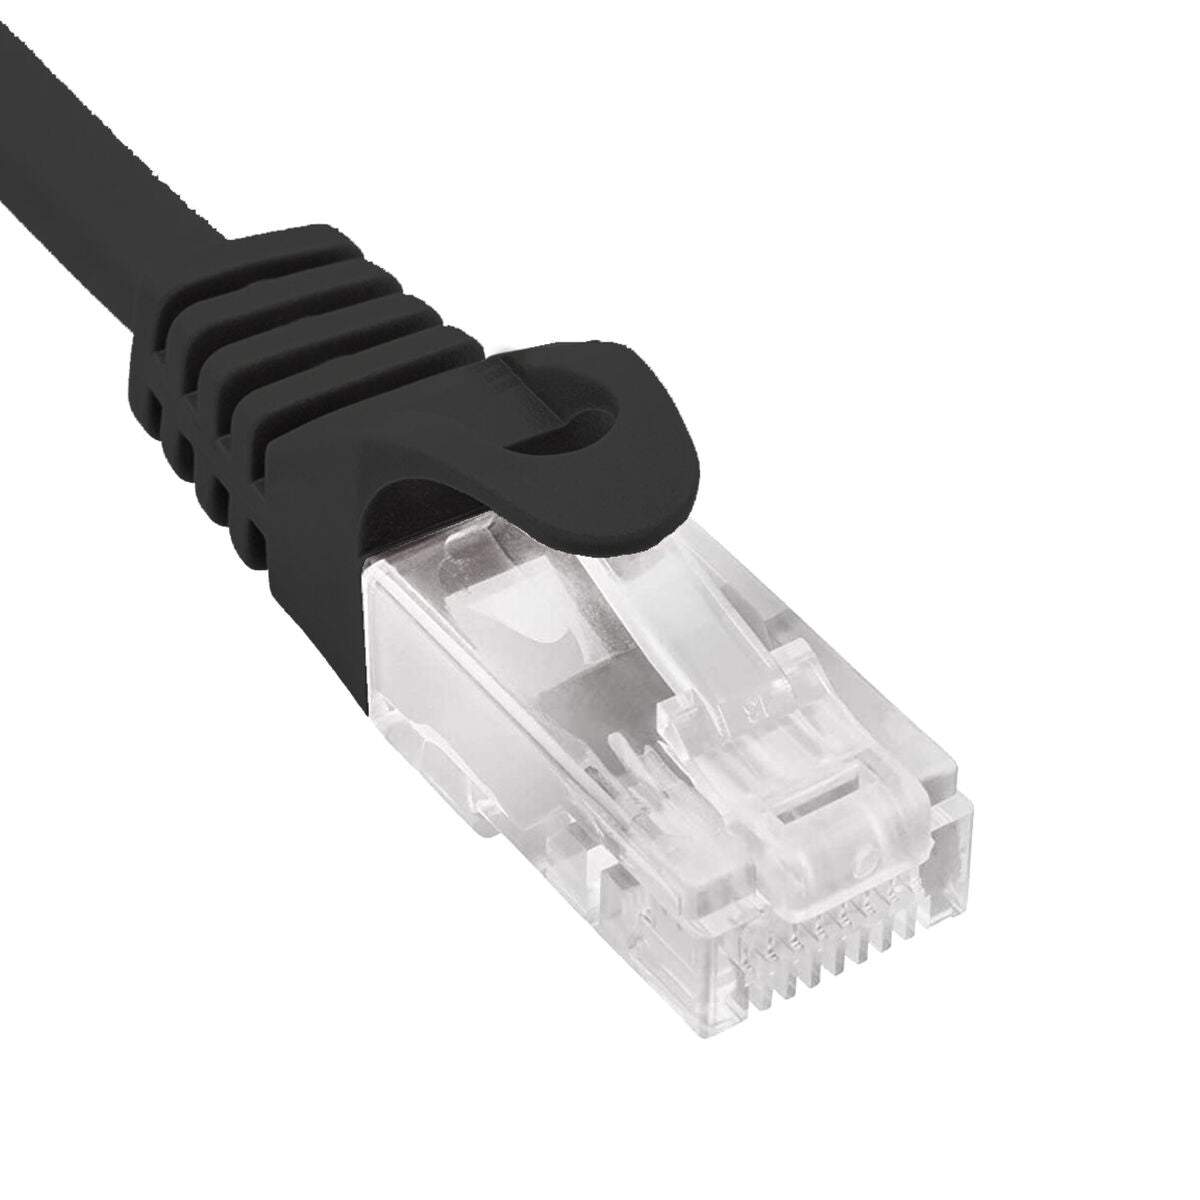 UTP Category 6 Rigid Network Cable Phasak PHK 1720 Black 20 m